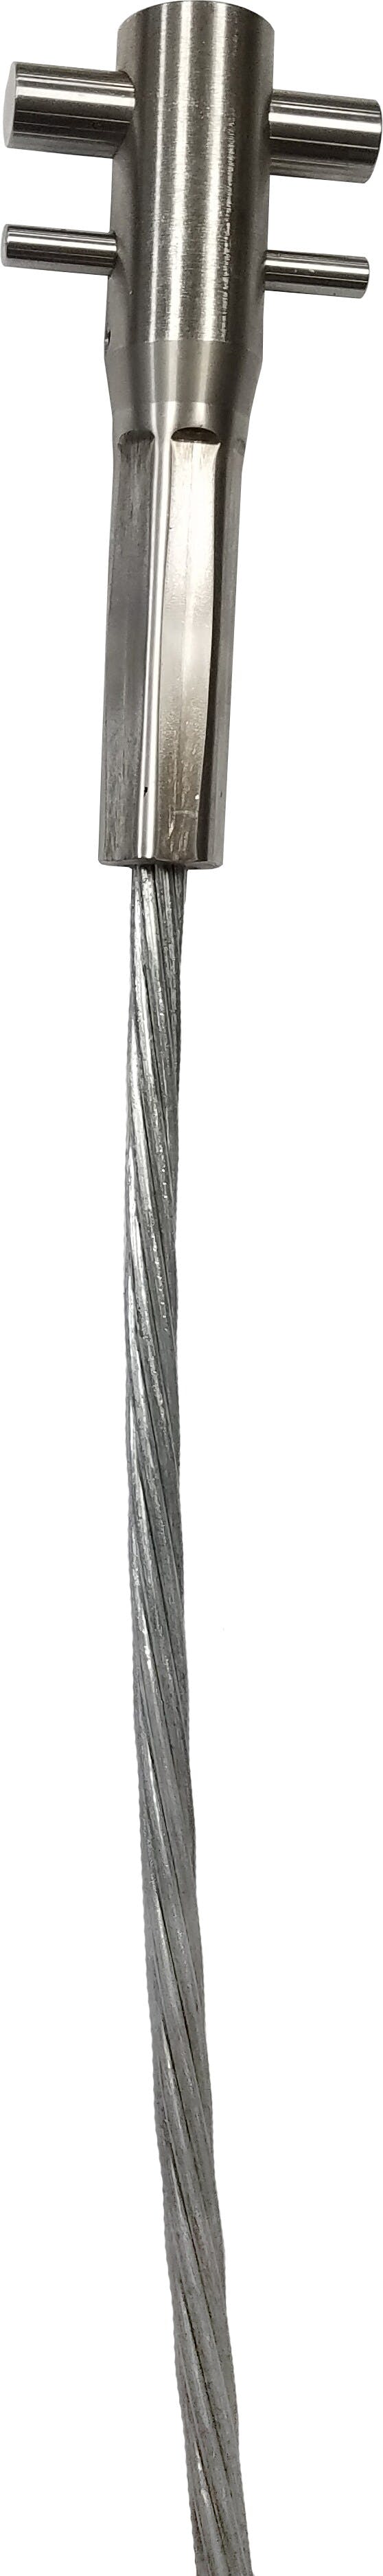 3M™ DBI-SALA® Lad-Saf™ Swaged Cable 6115026, 3/8 Inch, Galvanized Steel, 100 m